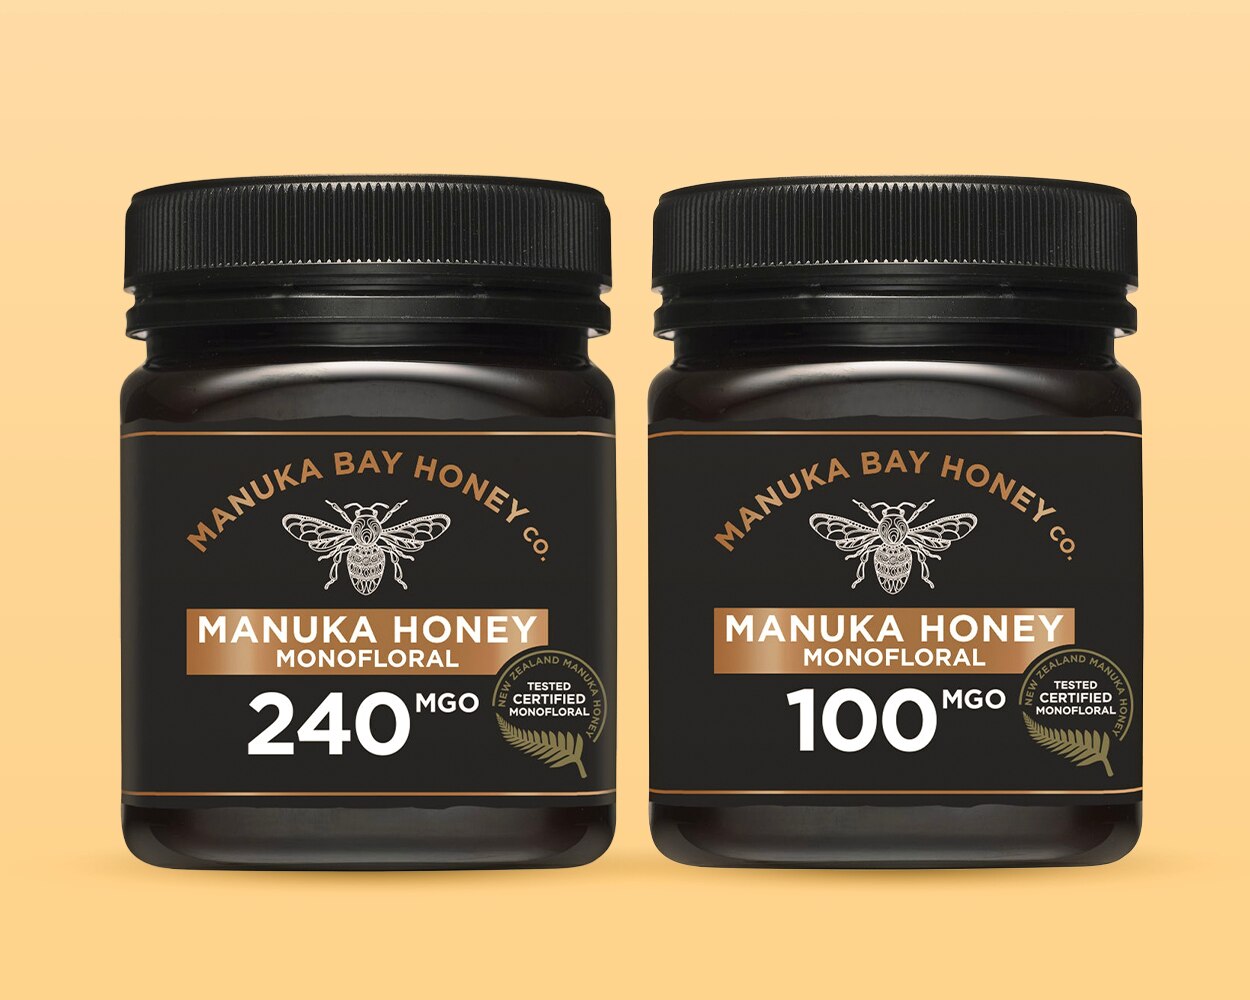 Vol, donker en romig: Manuka honing van Manuka Bay Honey Co. 